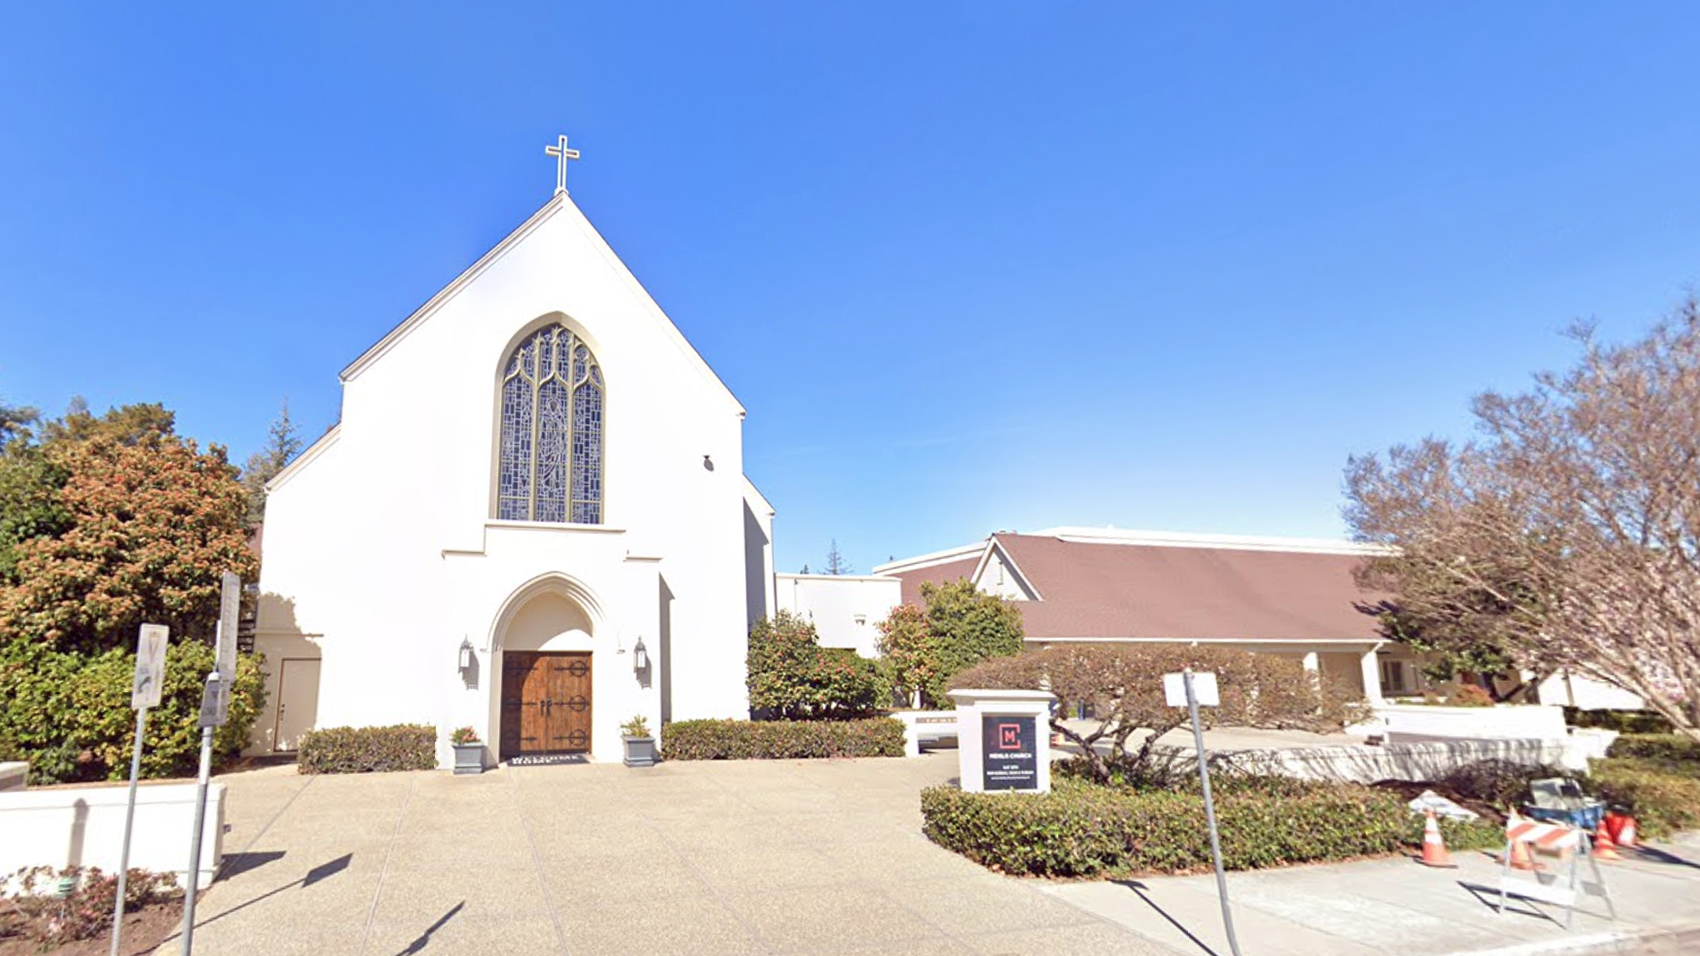 Menlo Church in Menlo Park, California. Image courtesy of Google Maps